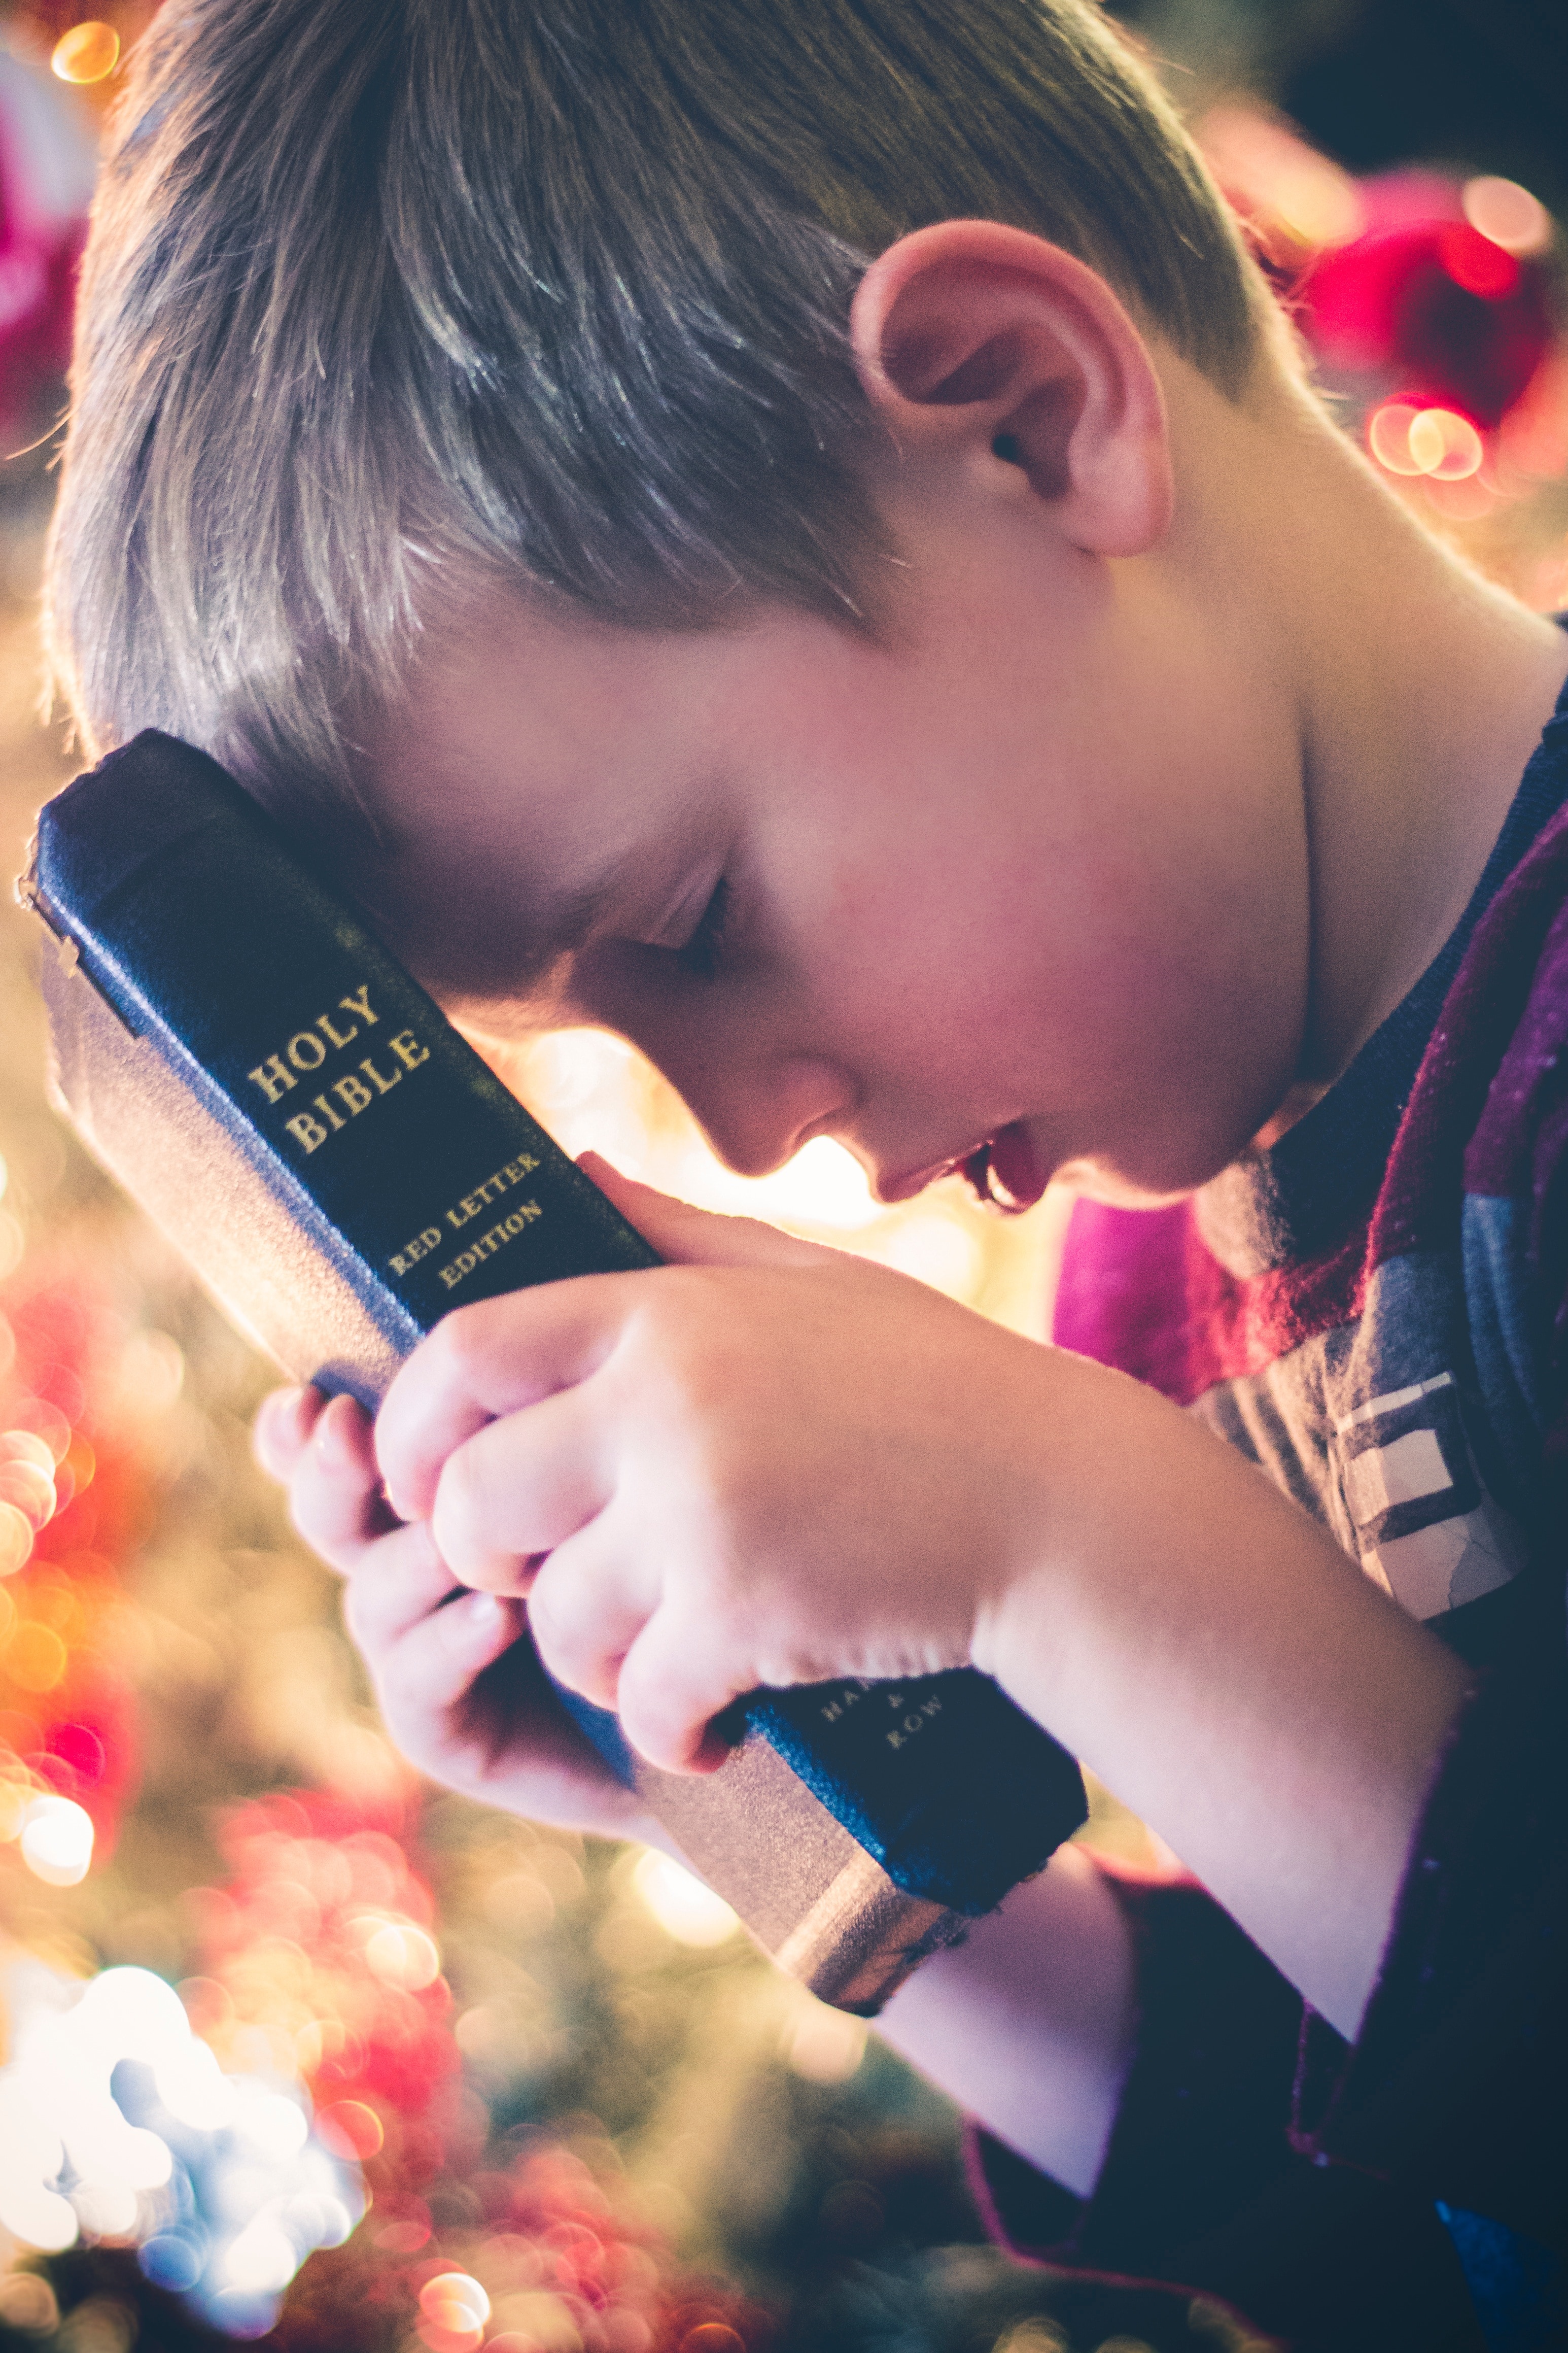 boy holding Holy Bible